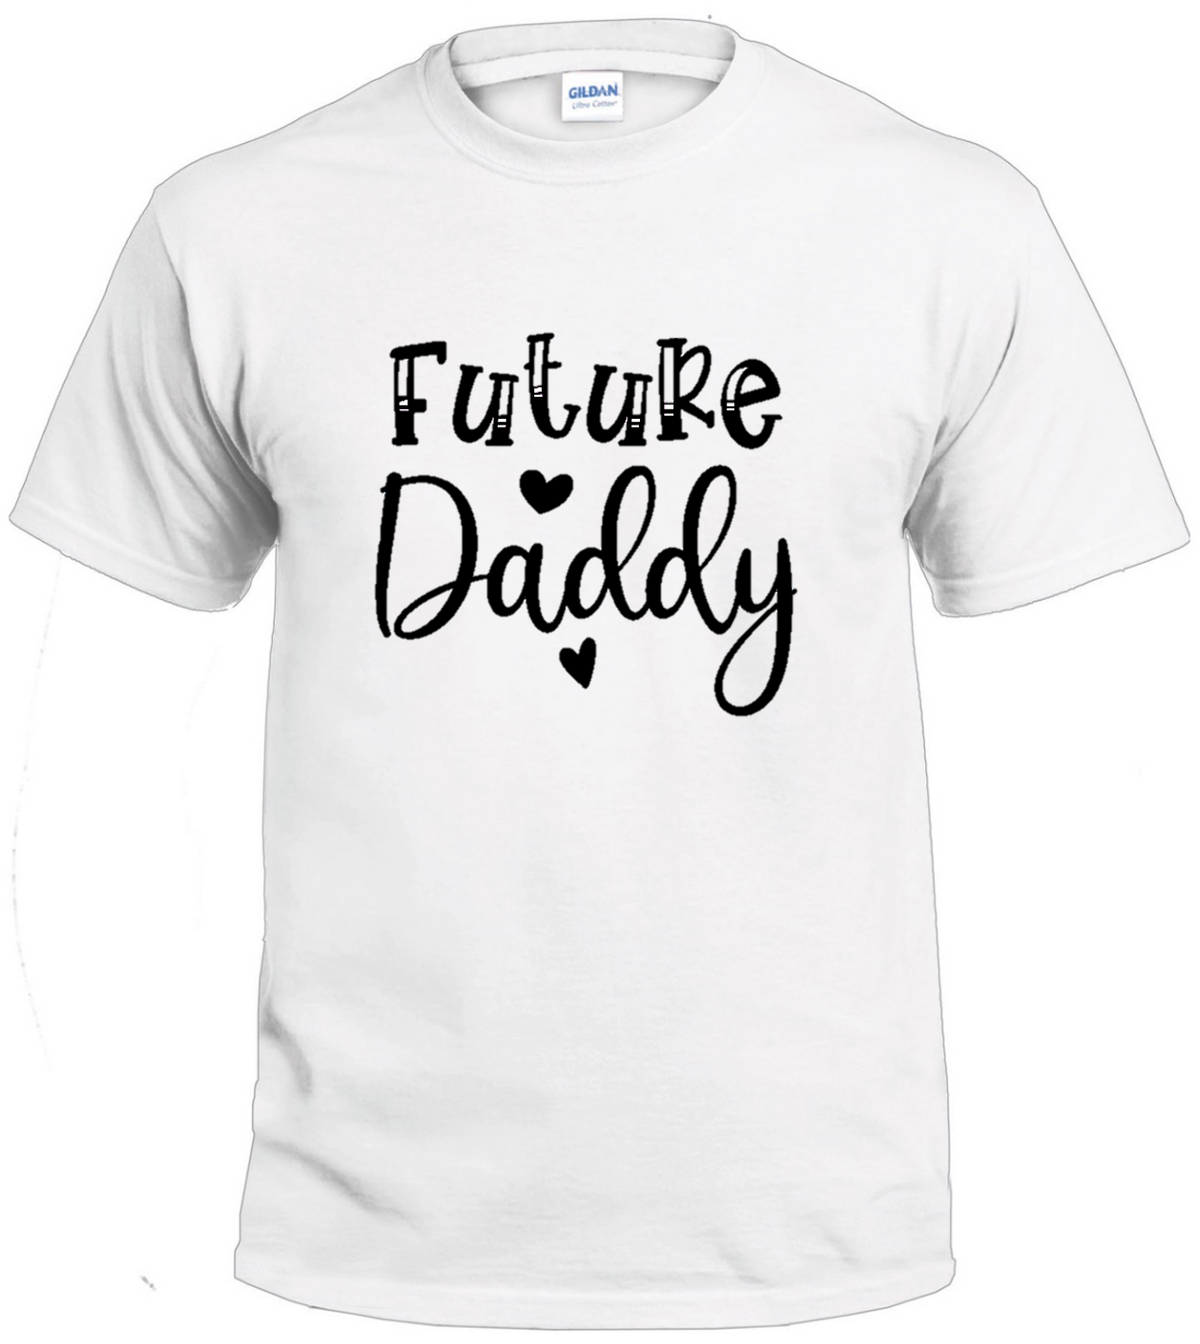 Future Daddy t-shirt